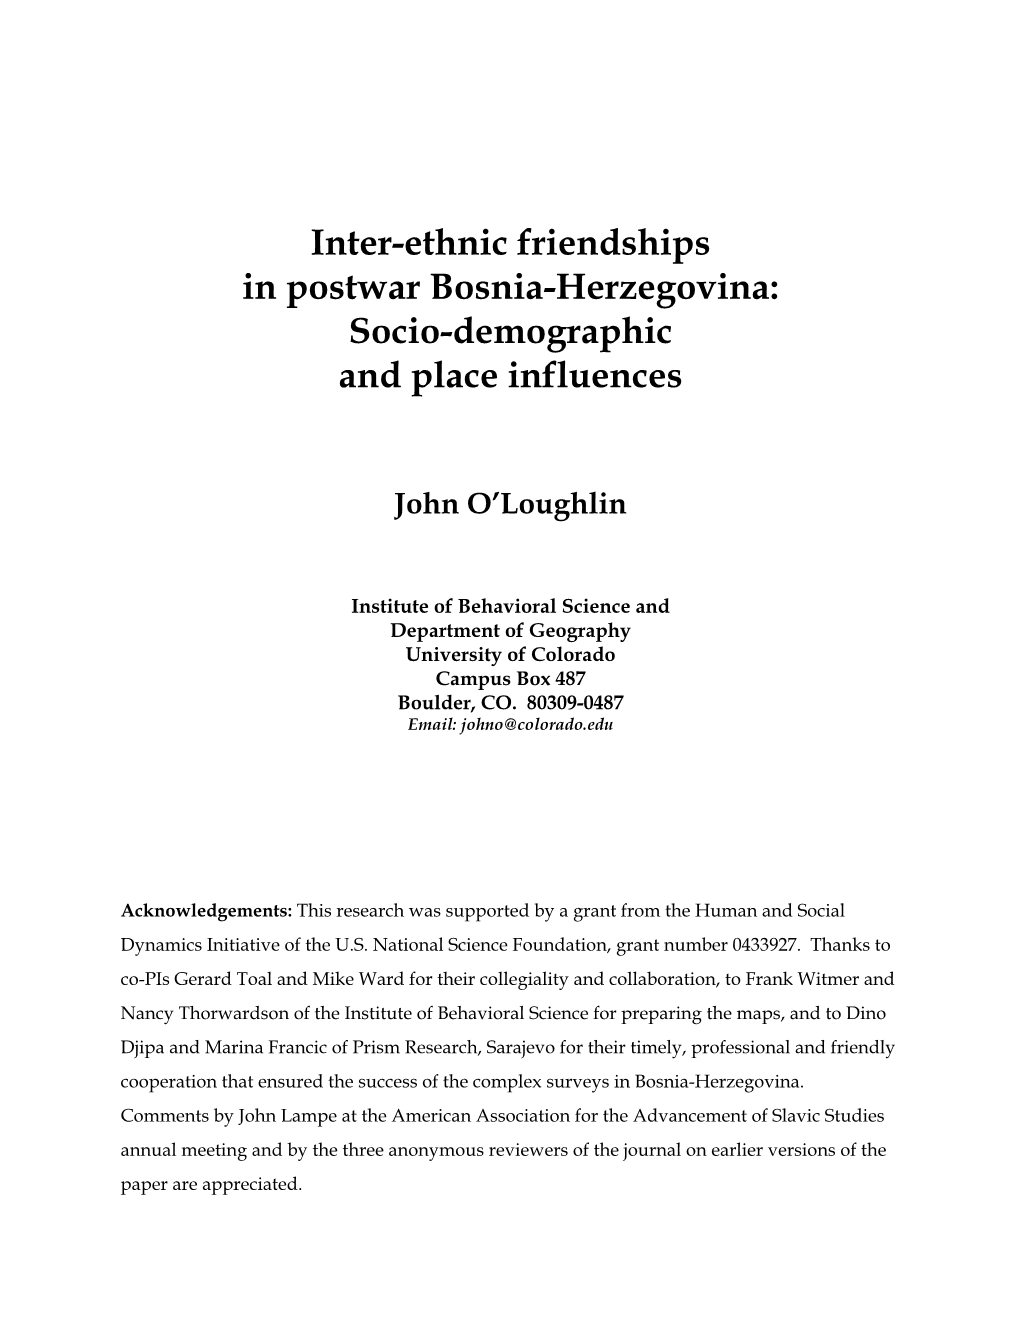 Inter-Ethnic Friendships in Postwar Bosnia-Herzegovina: Socio-Demographic and Place Influences